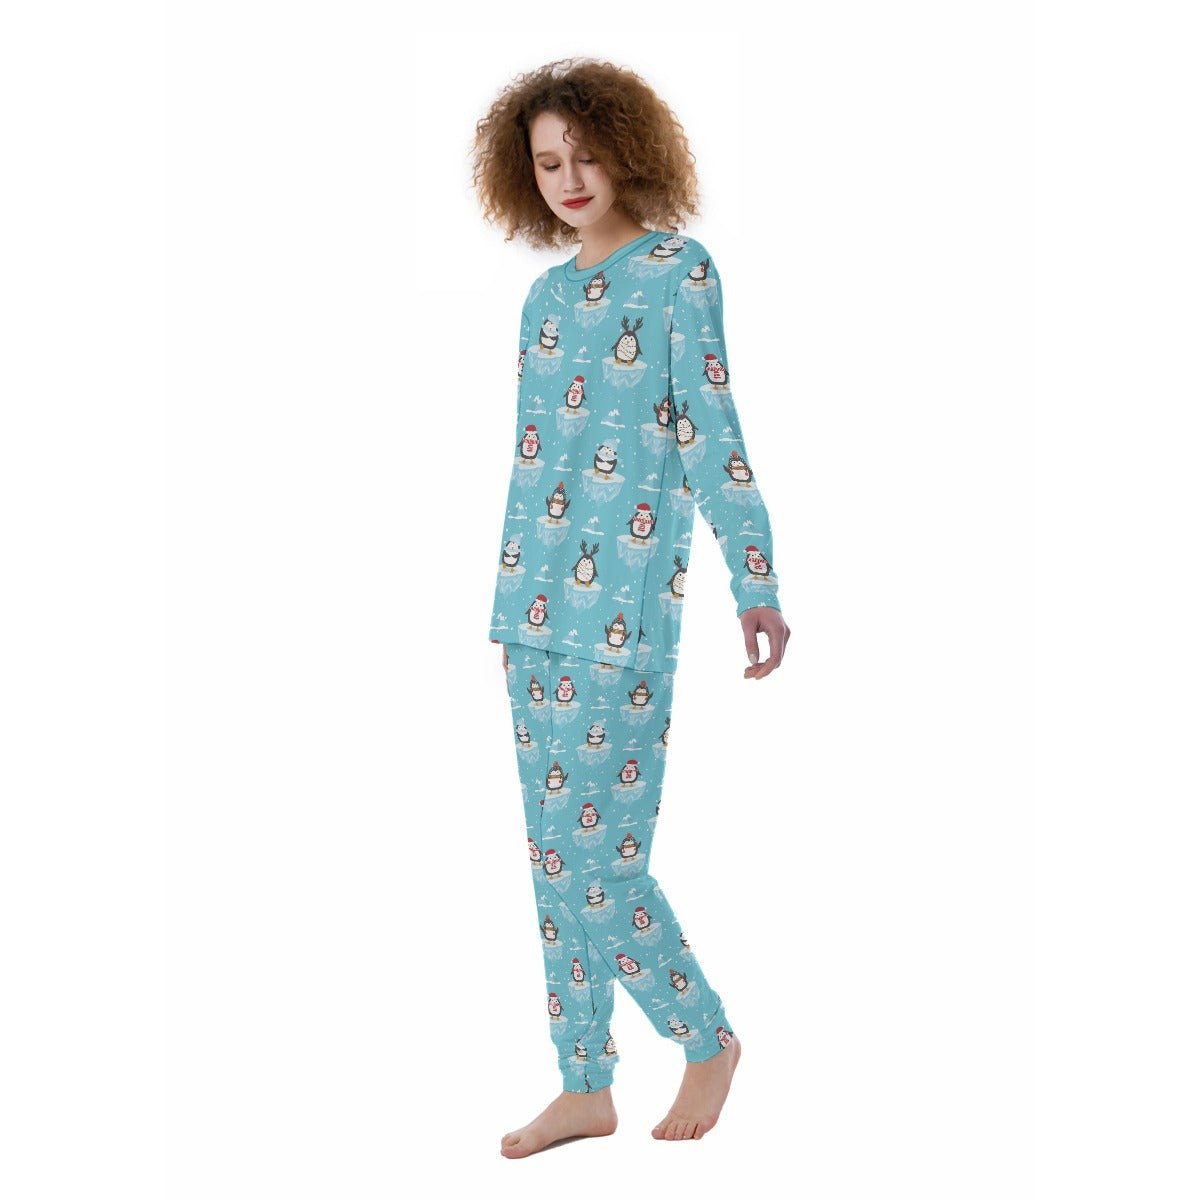 Women's Christmas Pyjamas - Icy Penguins - Festive Style